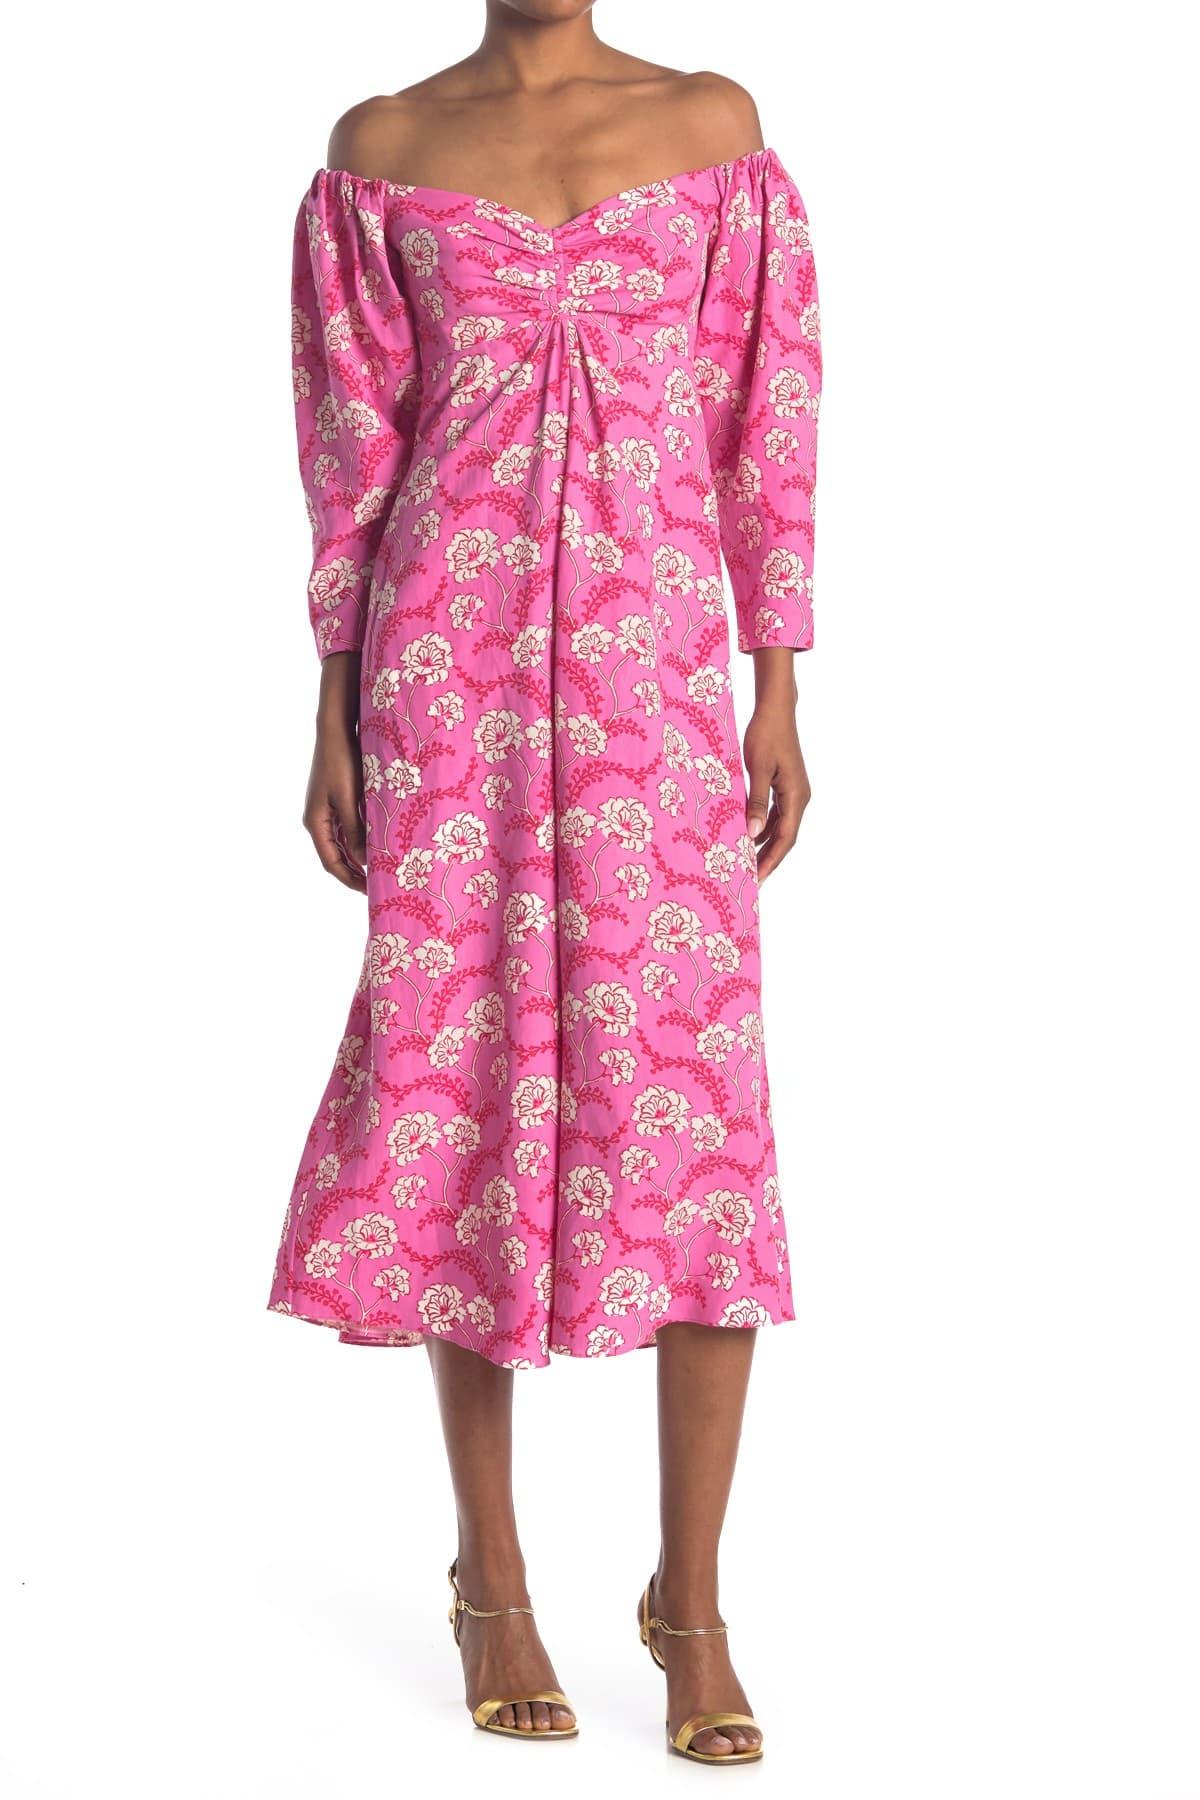 Alc pink floral dress